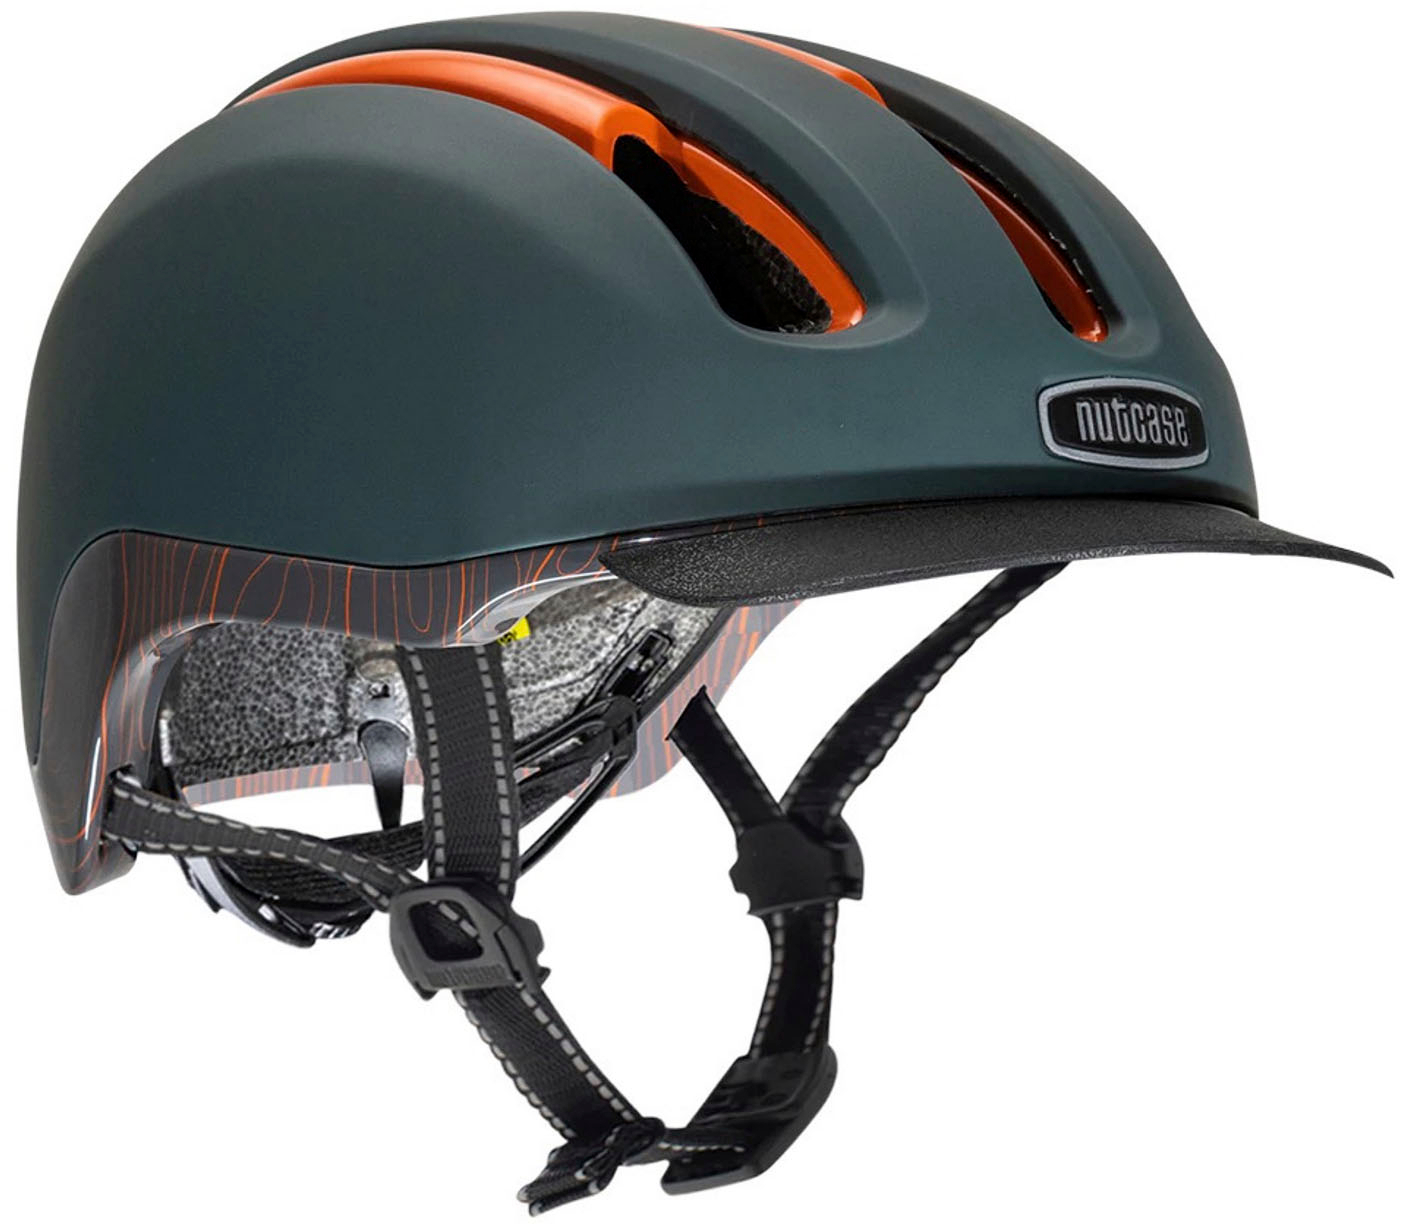 Nutcase - Vio Adventure Helmet with MIPS - Topo